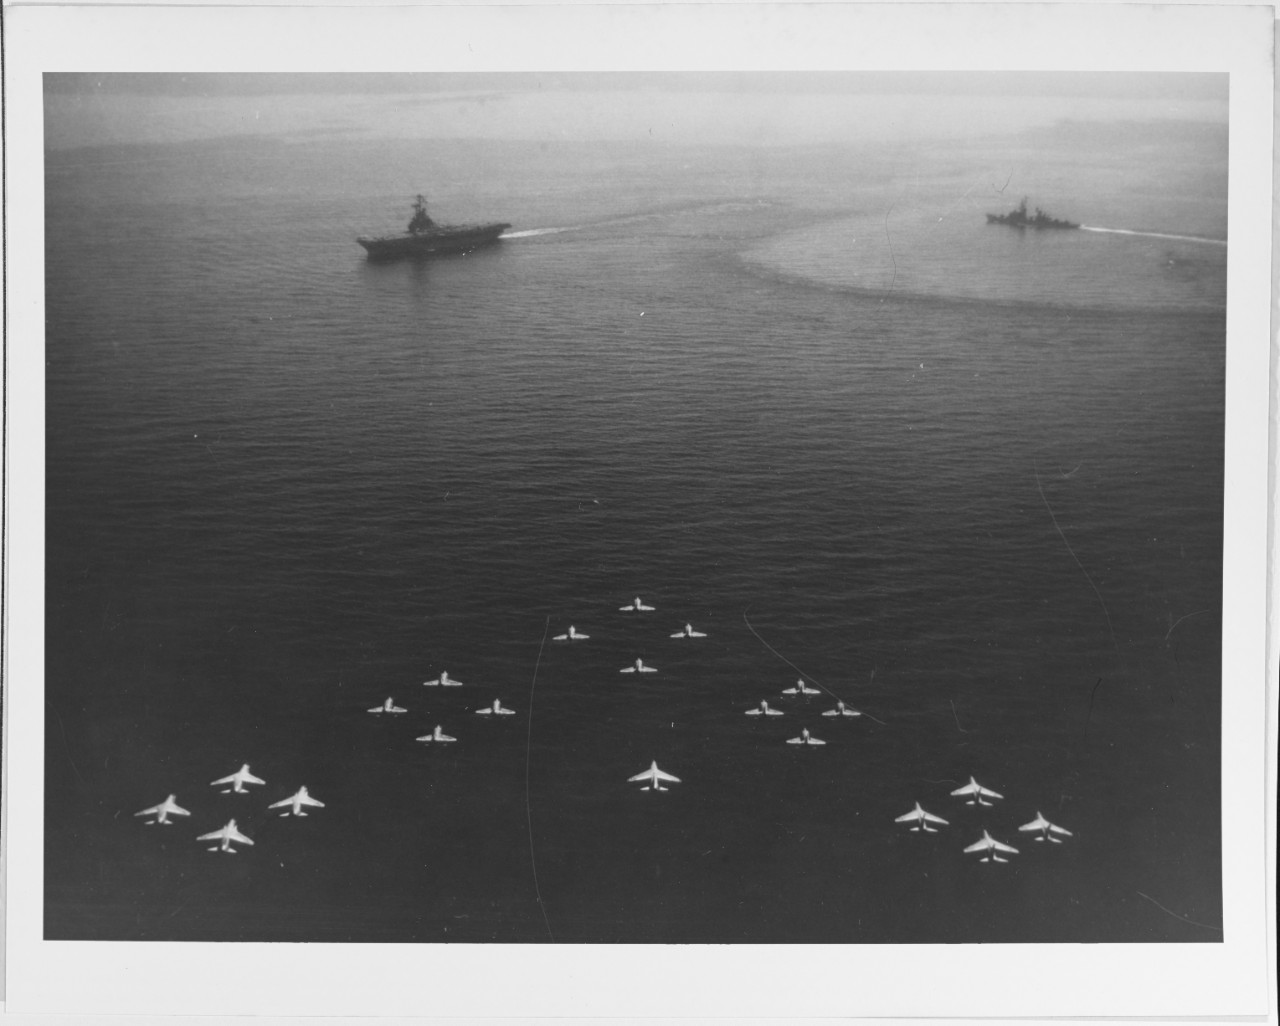 Formation of nine F8U crusaders and twelve A4D Skyhawks